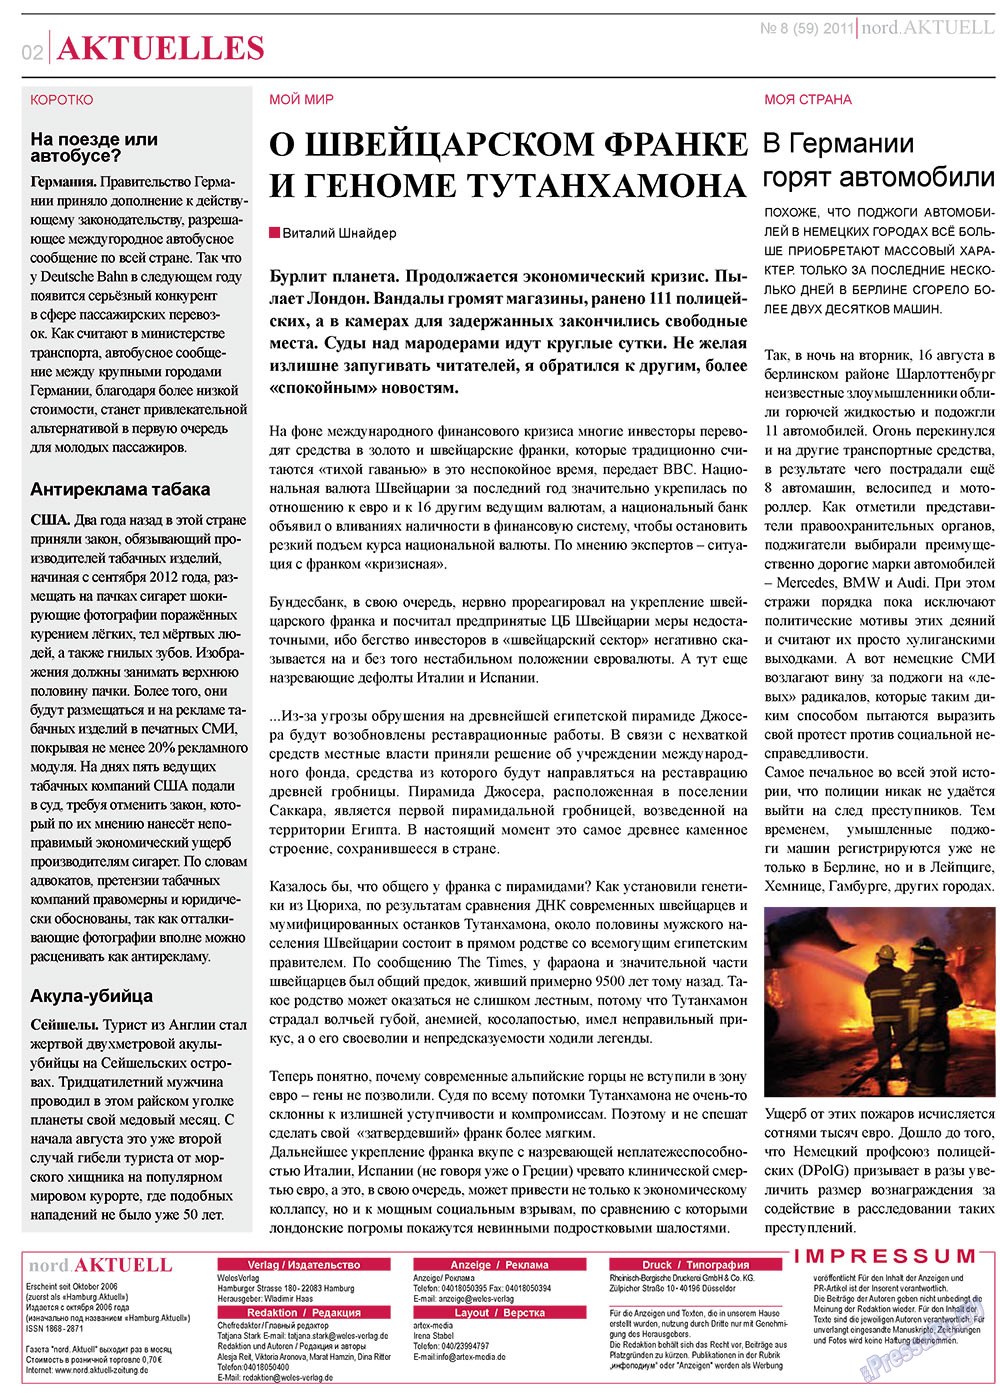 nord.Aktuell, газета. 2011 №8 стр.2